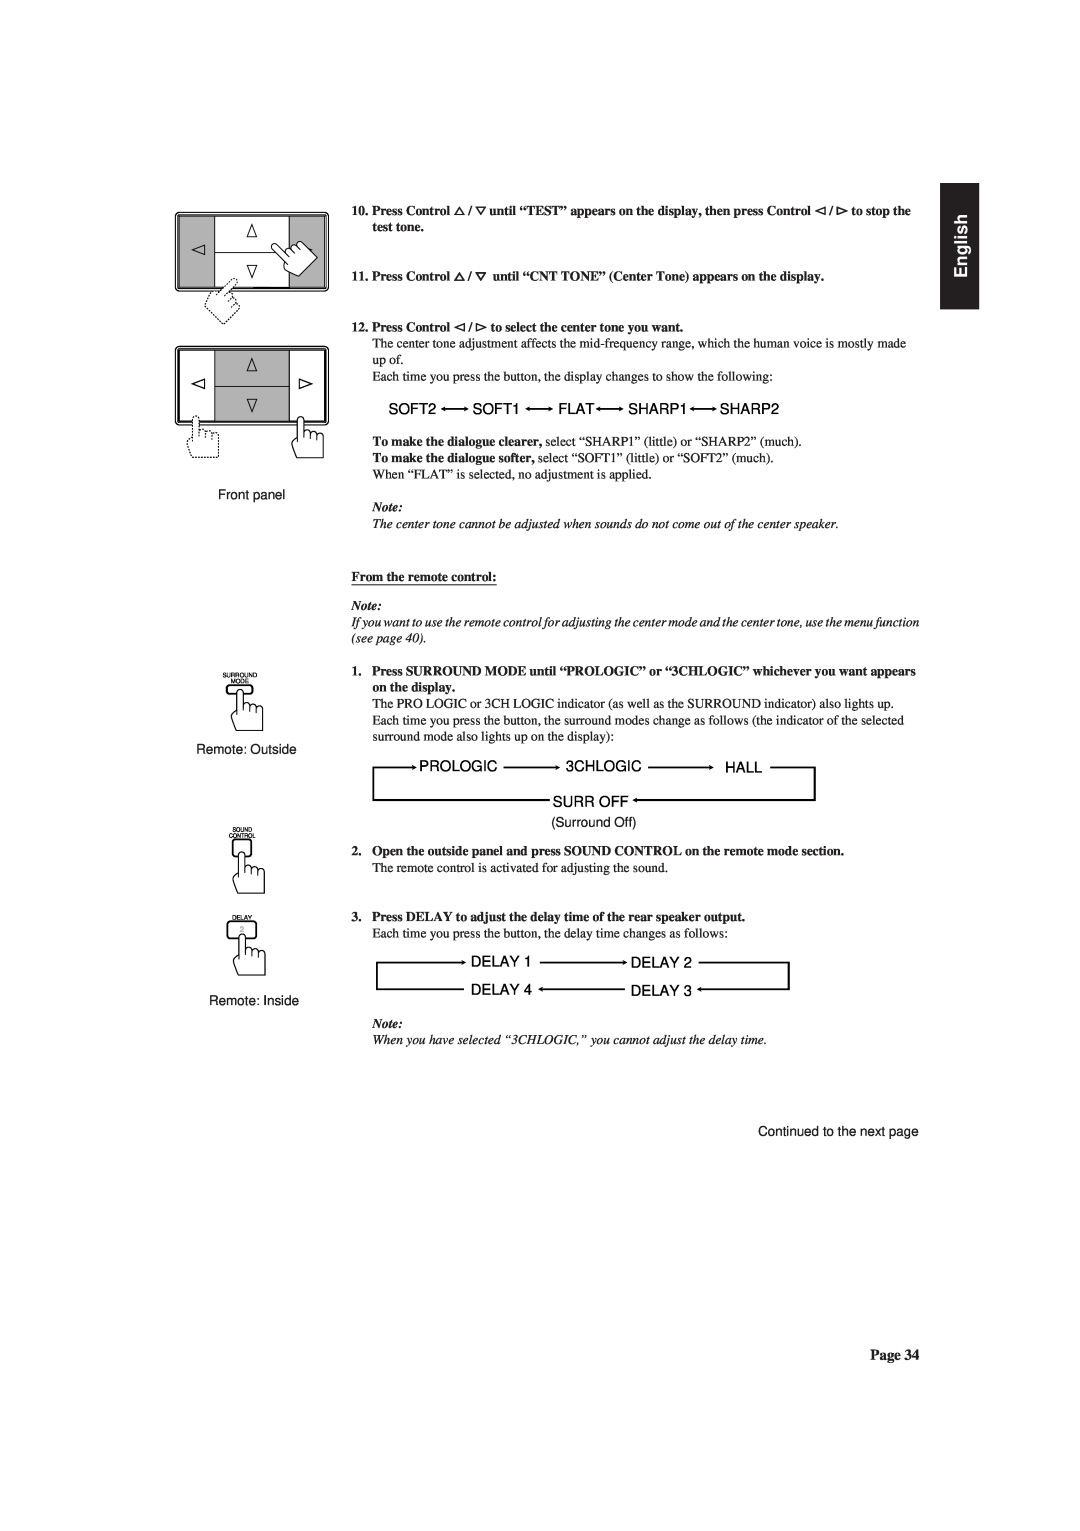 JVC RX-730RBK manual SOFT2 SOFT1 FLATSHARP1SHARP2, English, PROLOGIC 3CHLOGIC HALL SURR OFF, DELAY 1 DELAY DELAY 4 DELAY 